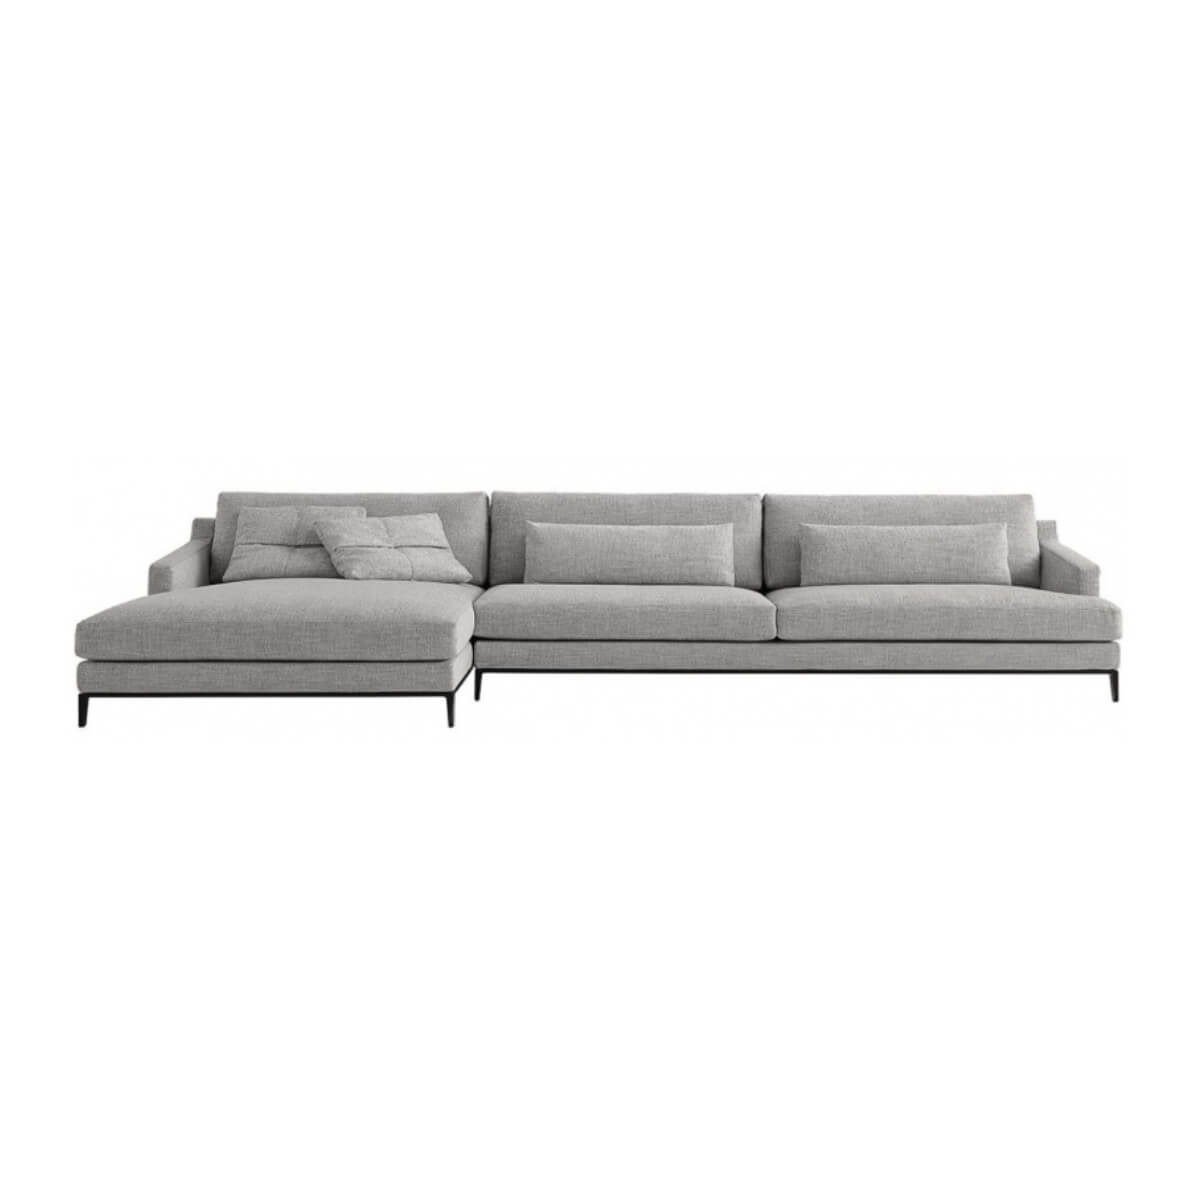 ElegantEnclave Cotton Linen Sofa: A Modern Oasis